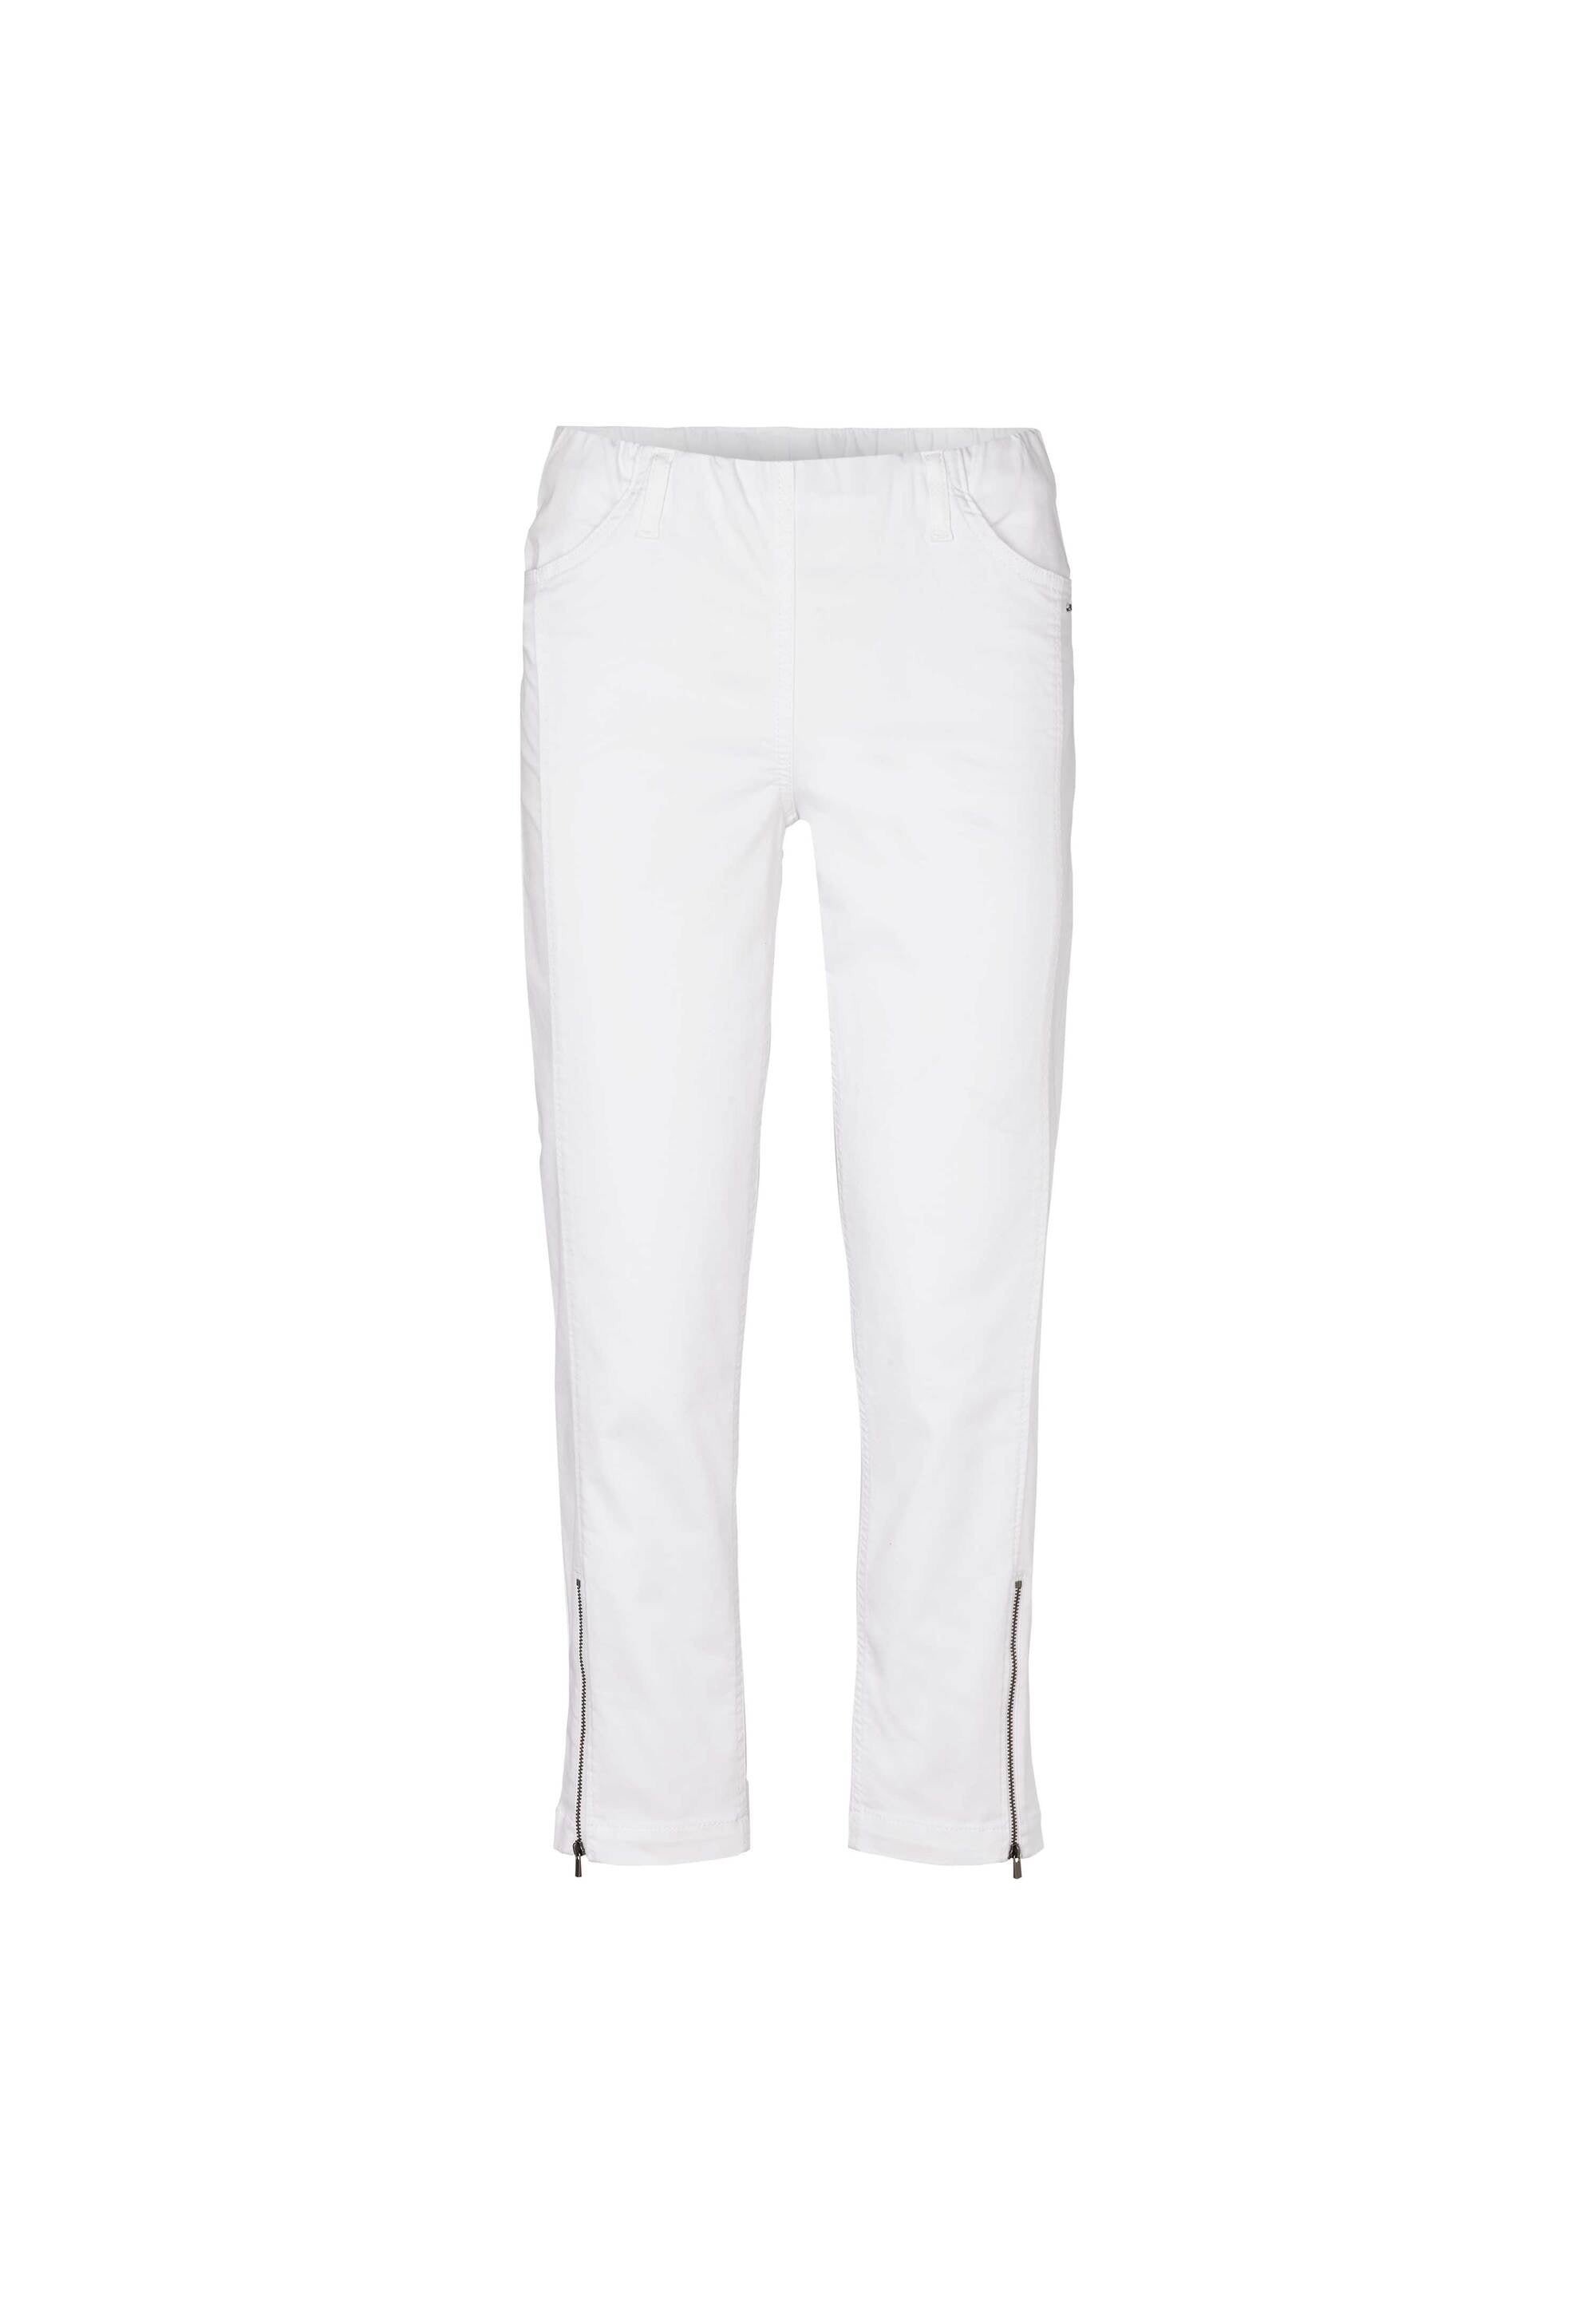 LAURIE  Piper Regular Crop Trousers REGULAR 10000 White